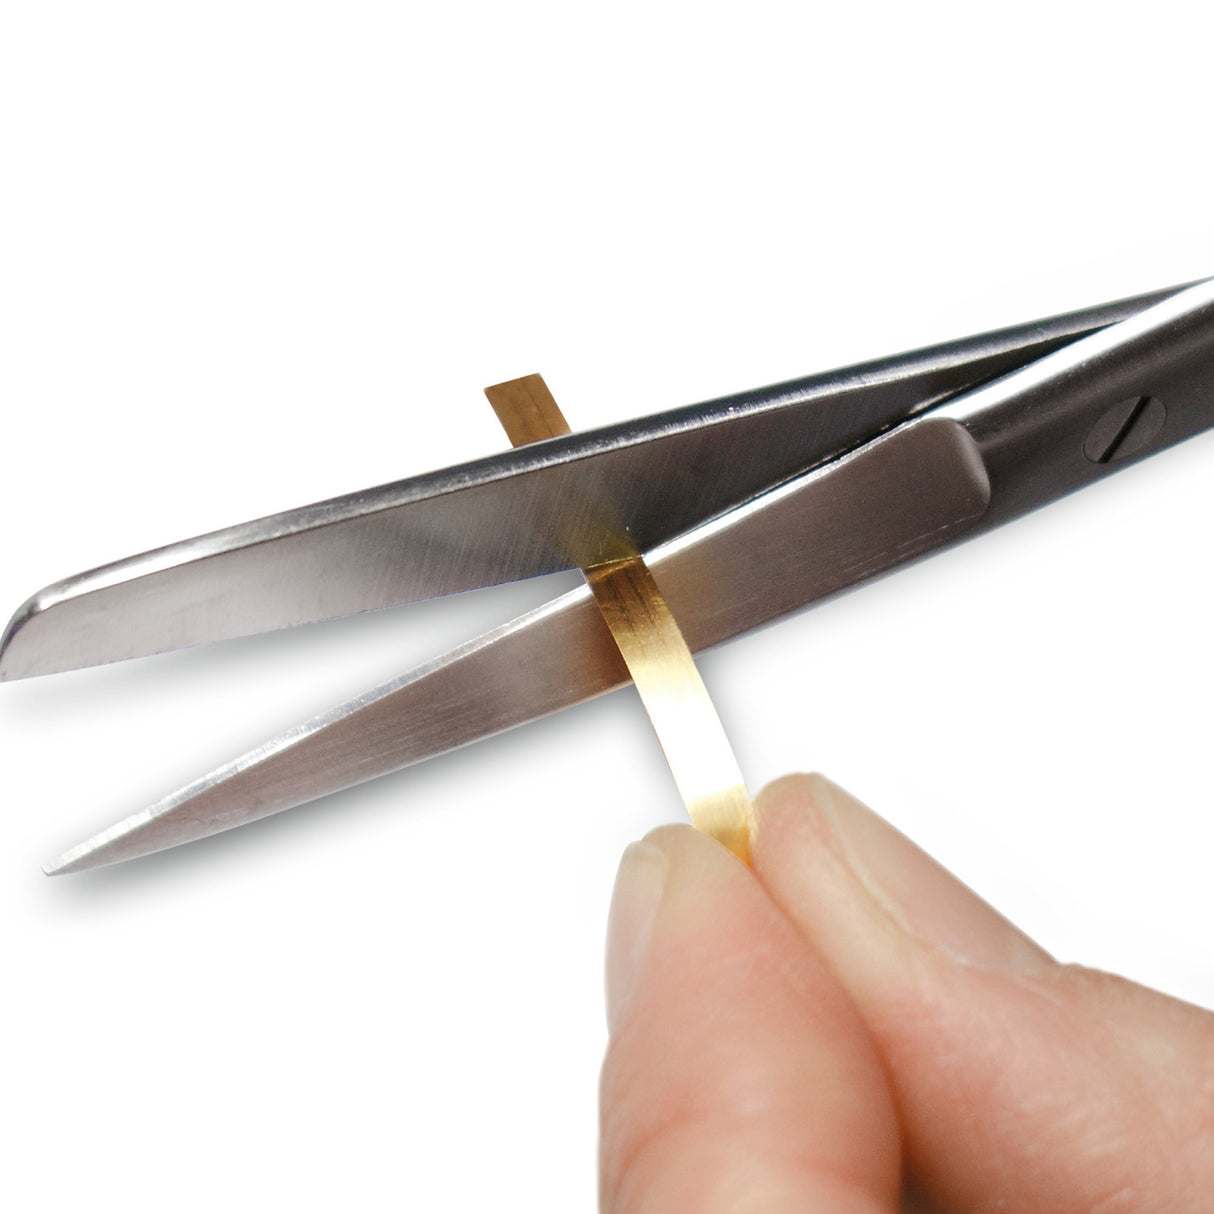 Bandage scissors | Hardened steel 14.5cm